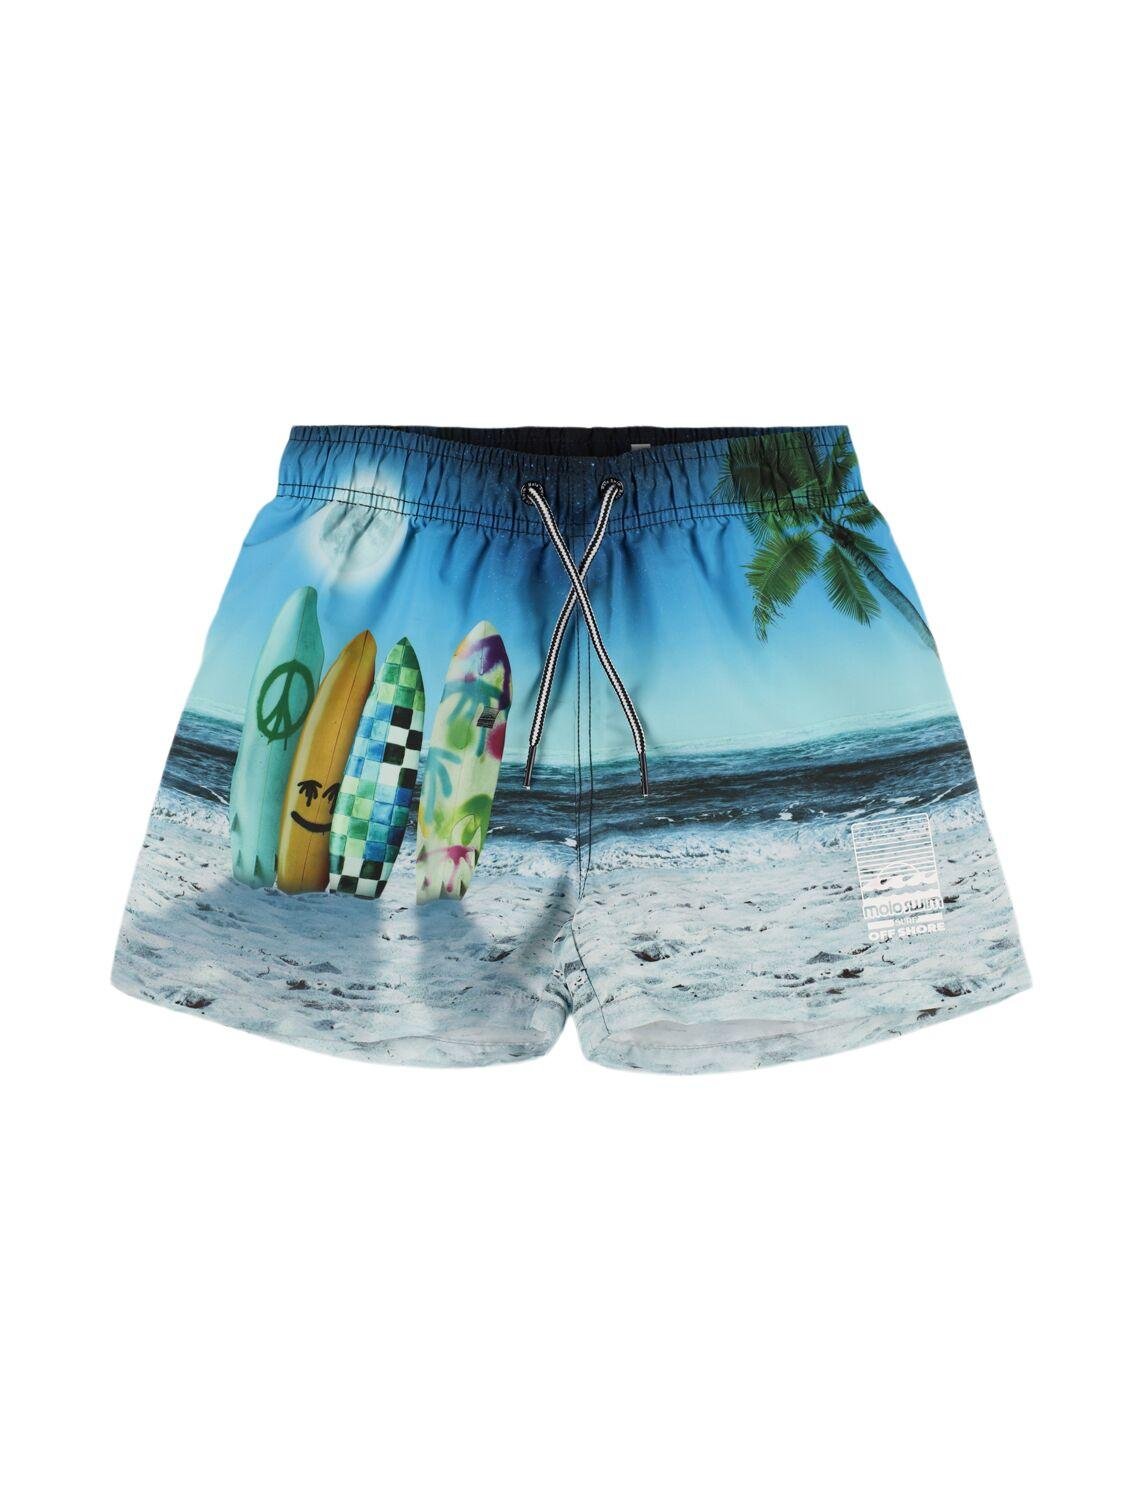 Printed Recycled Nylon Swim Shorts by MOLO